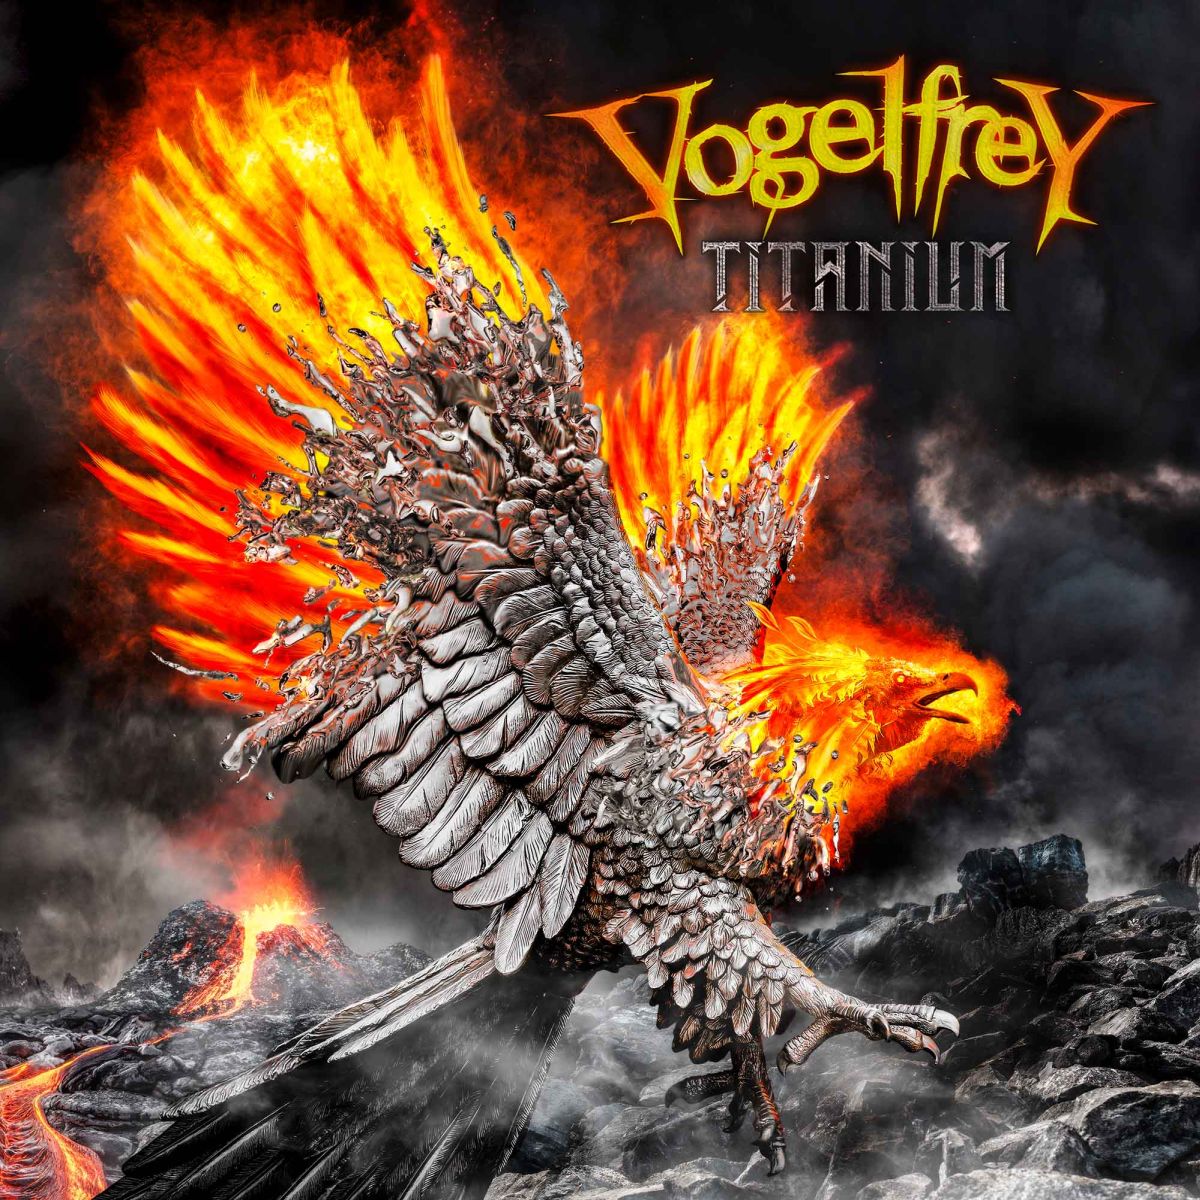 Vogelfrey – Titanium  VÖ: 16.09.22, Folk Metal, Metalville